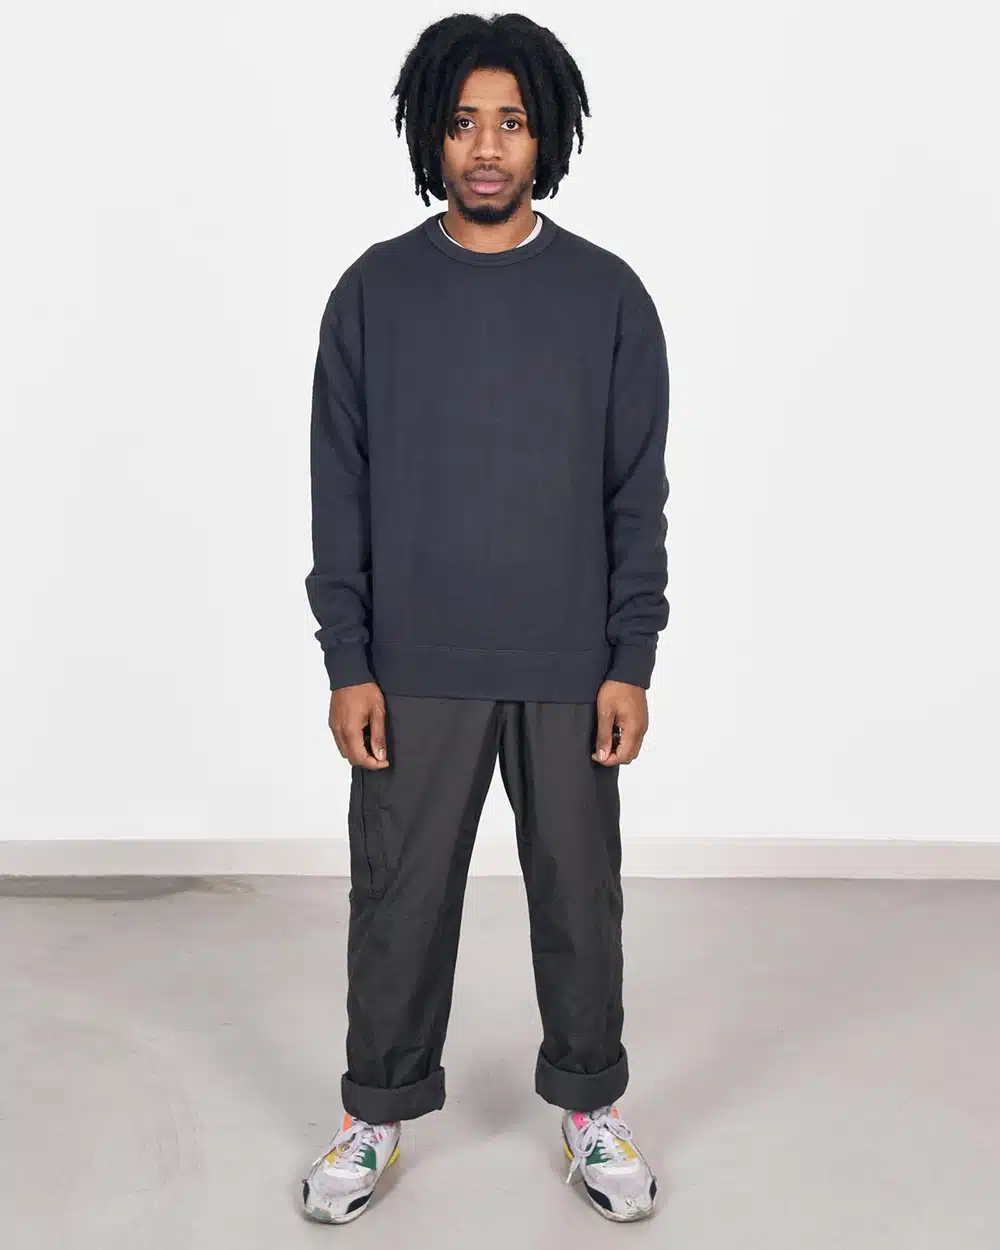 Loop & Weft Tompkins Knit Crewneck Sweatshirt - Antique Black